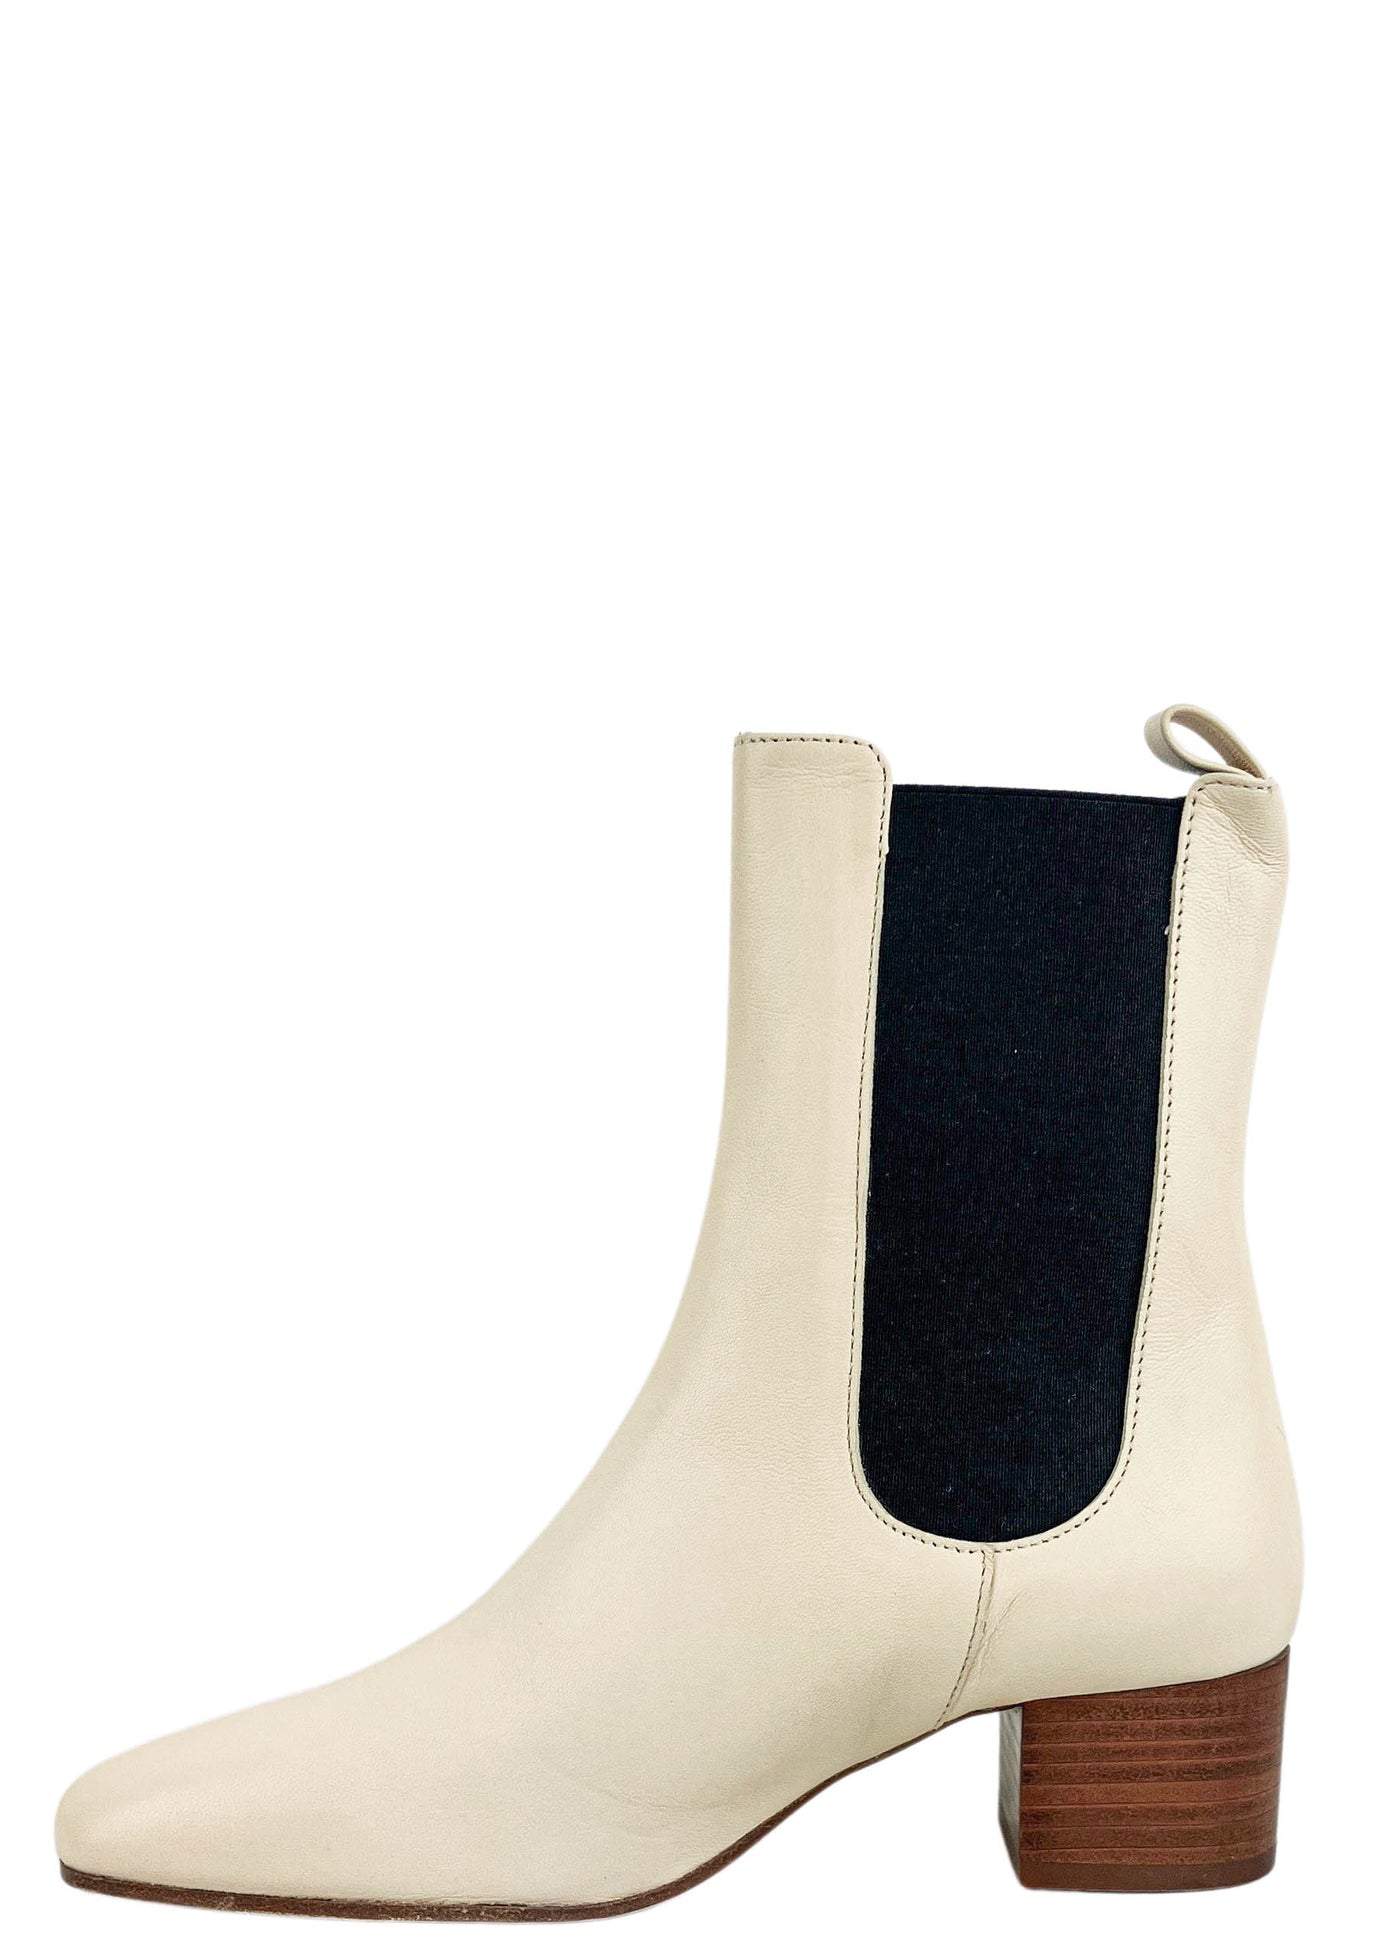 Staud Daphne Boots in Cream/Black - Discounts on Staud at UAL